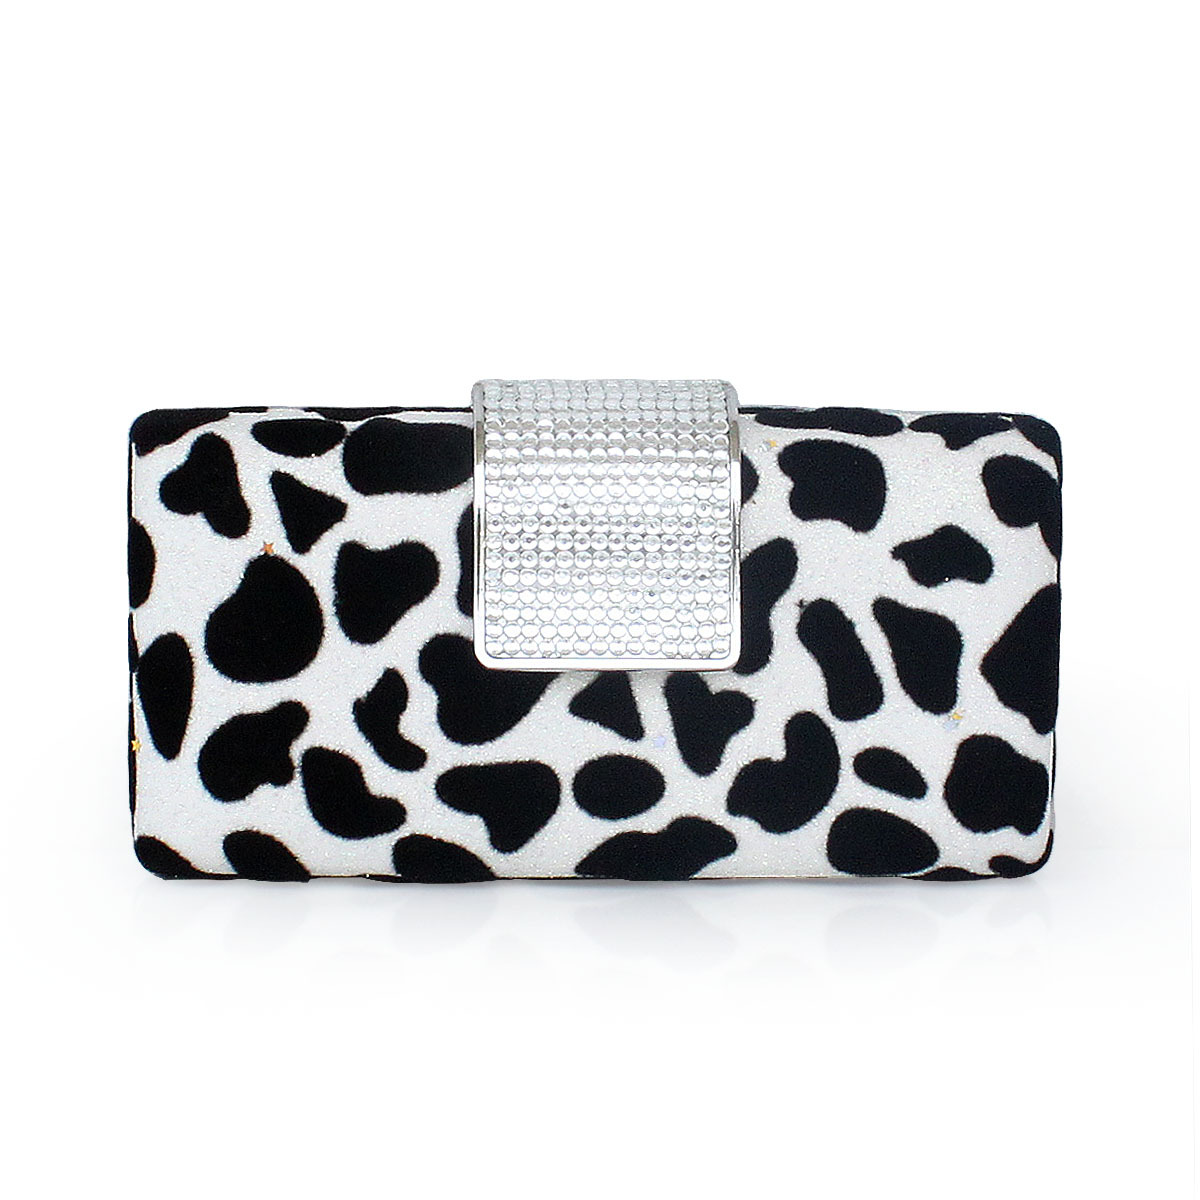 Leopard print purse clipart